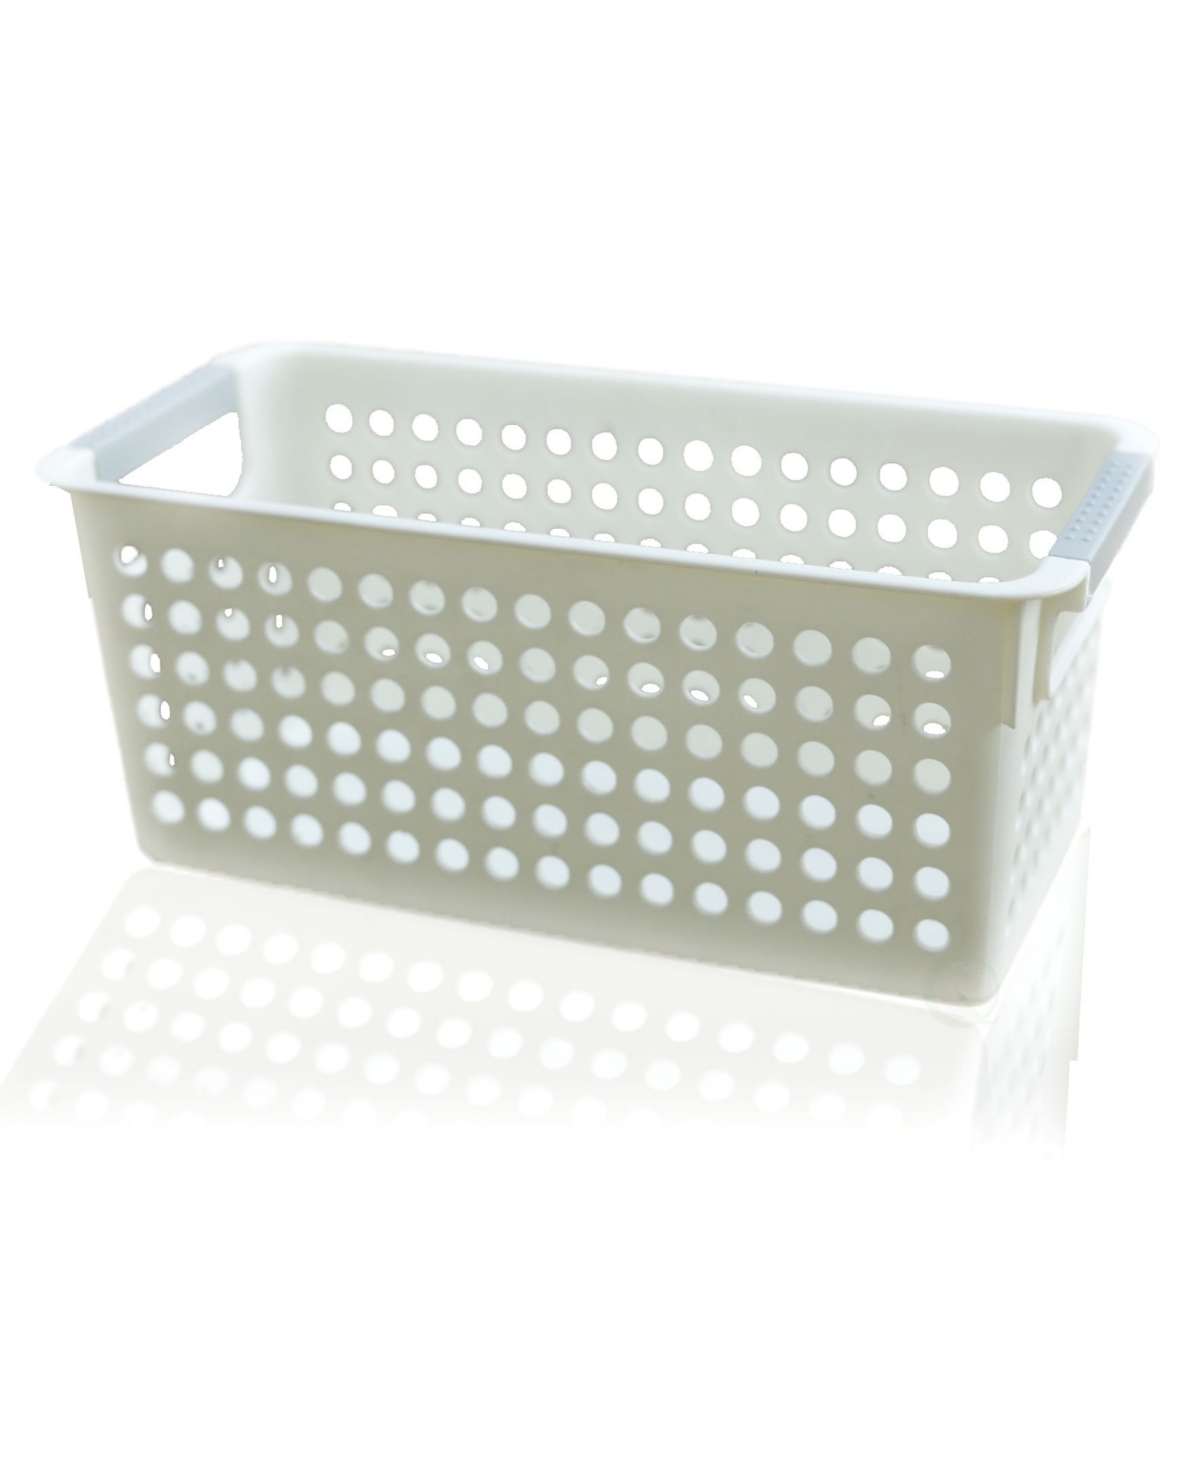 Vintiquewise Rectangular Plastic Shelf Organizer Basket with Handles - White